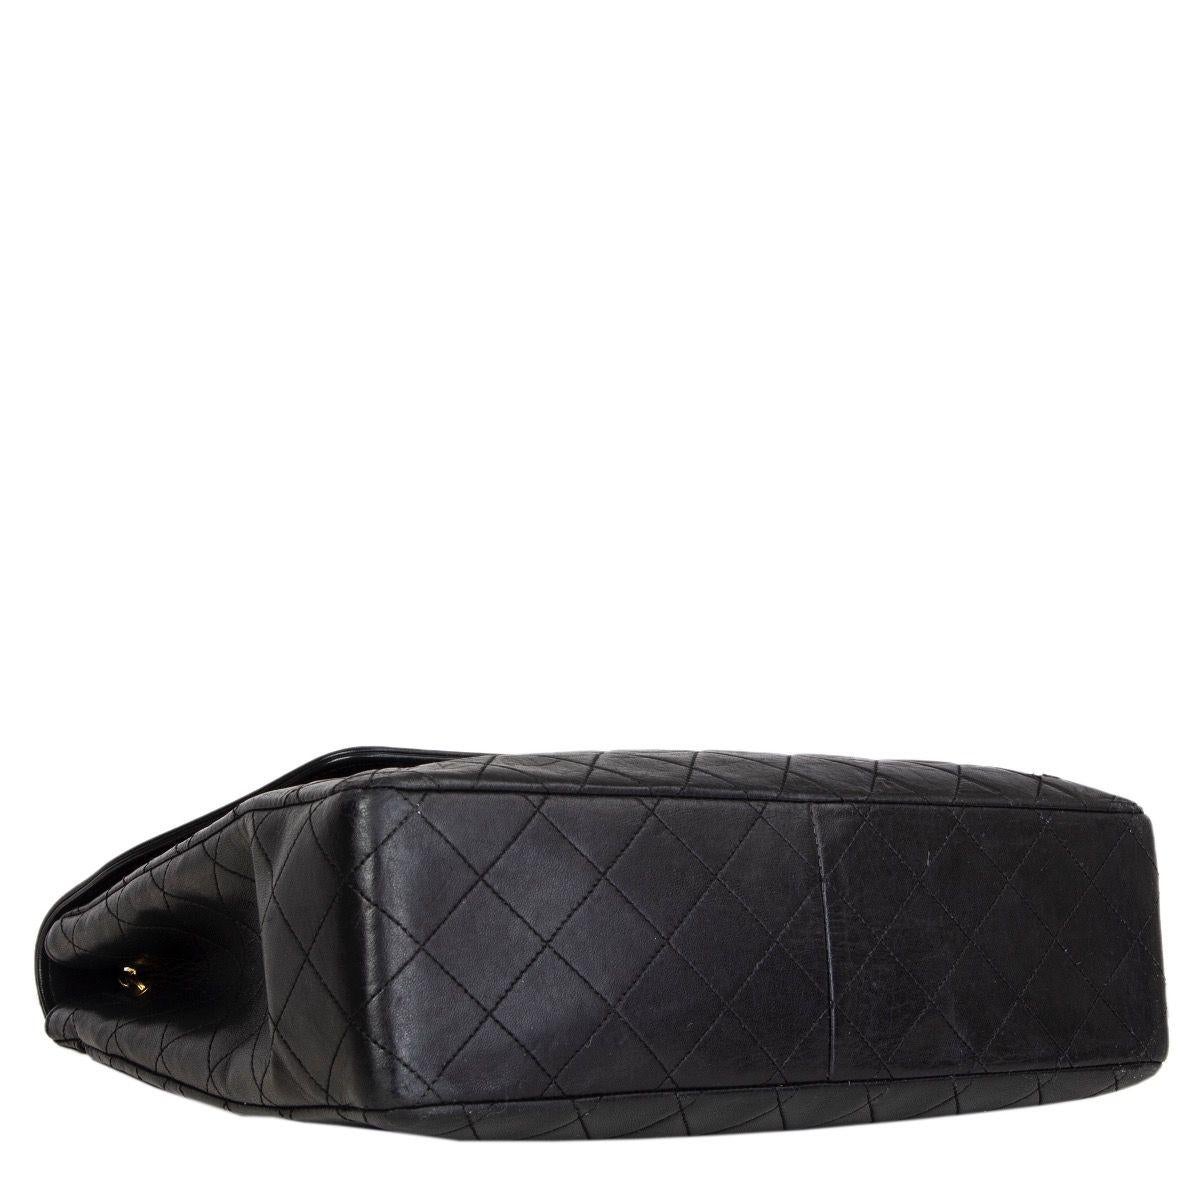 Women's CHANEL black quilted leather VINTAGE TRAPEZE Flap Shoulder Bag